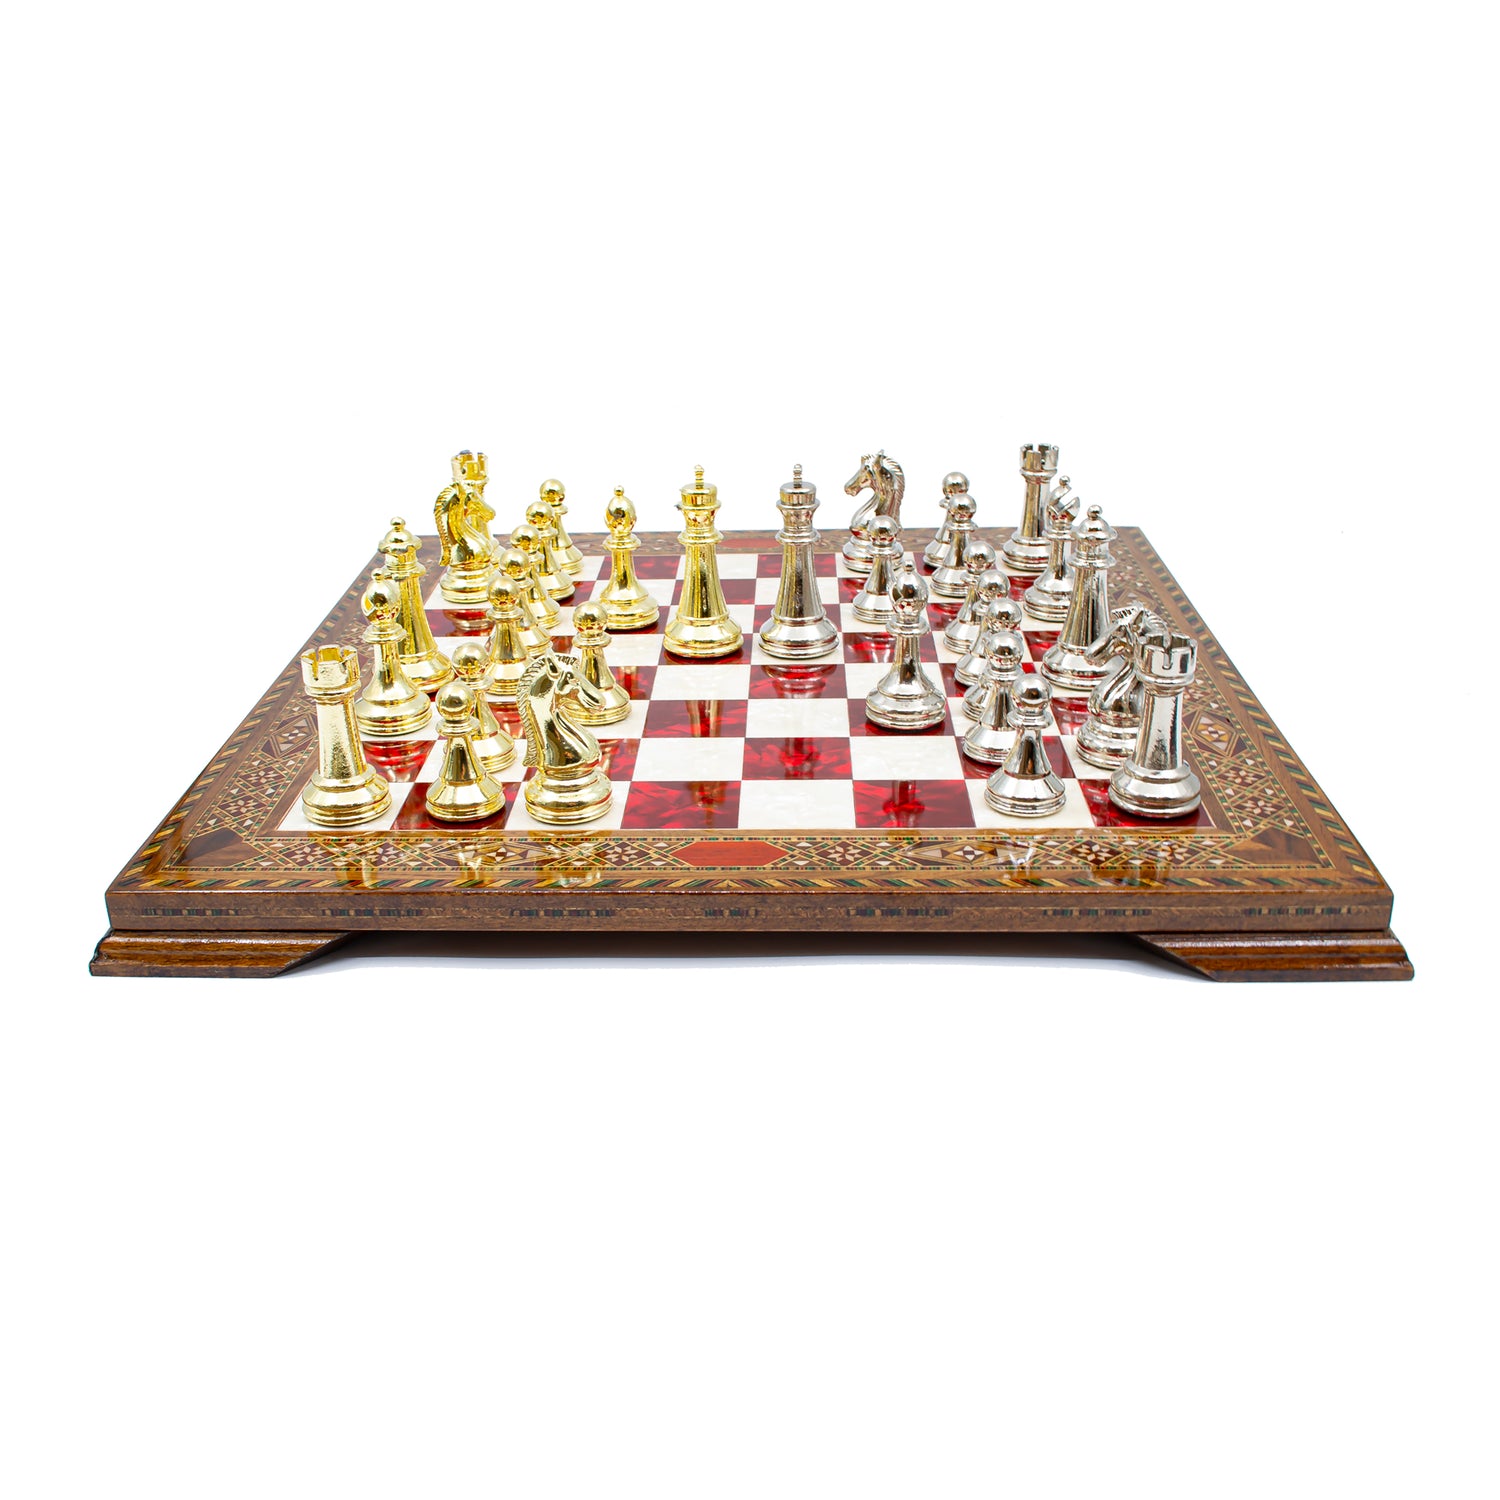 Staunton Chess Set: Gold & Silver on Red Mosaic - Ketohandcraft